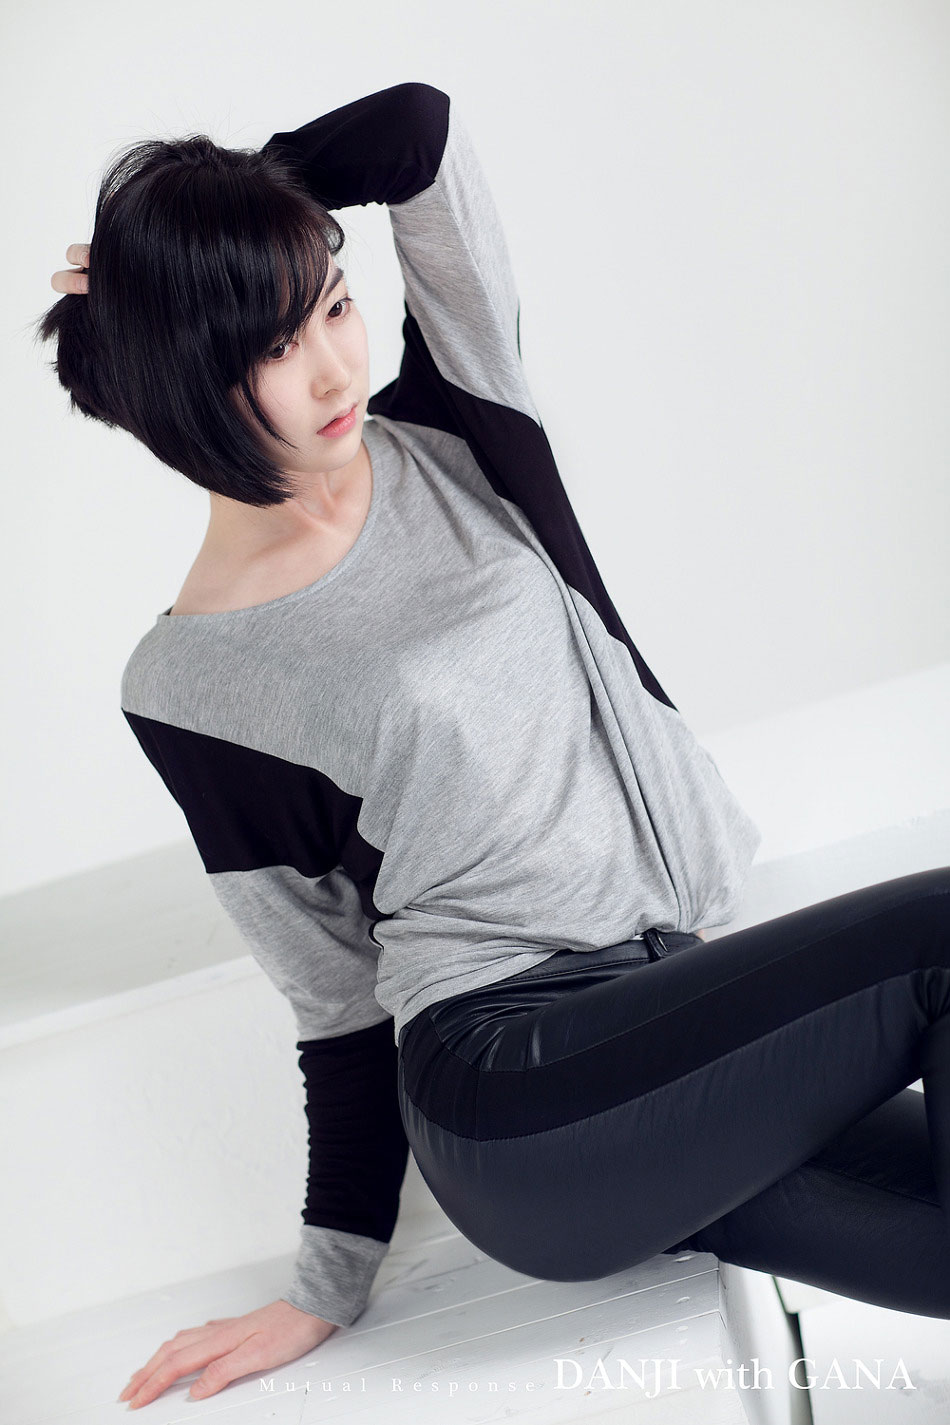 Korean model Lee Gana